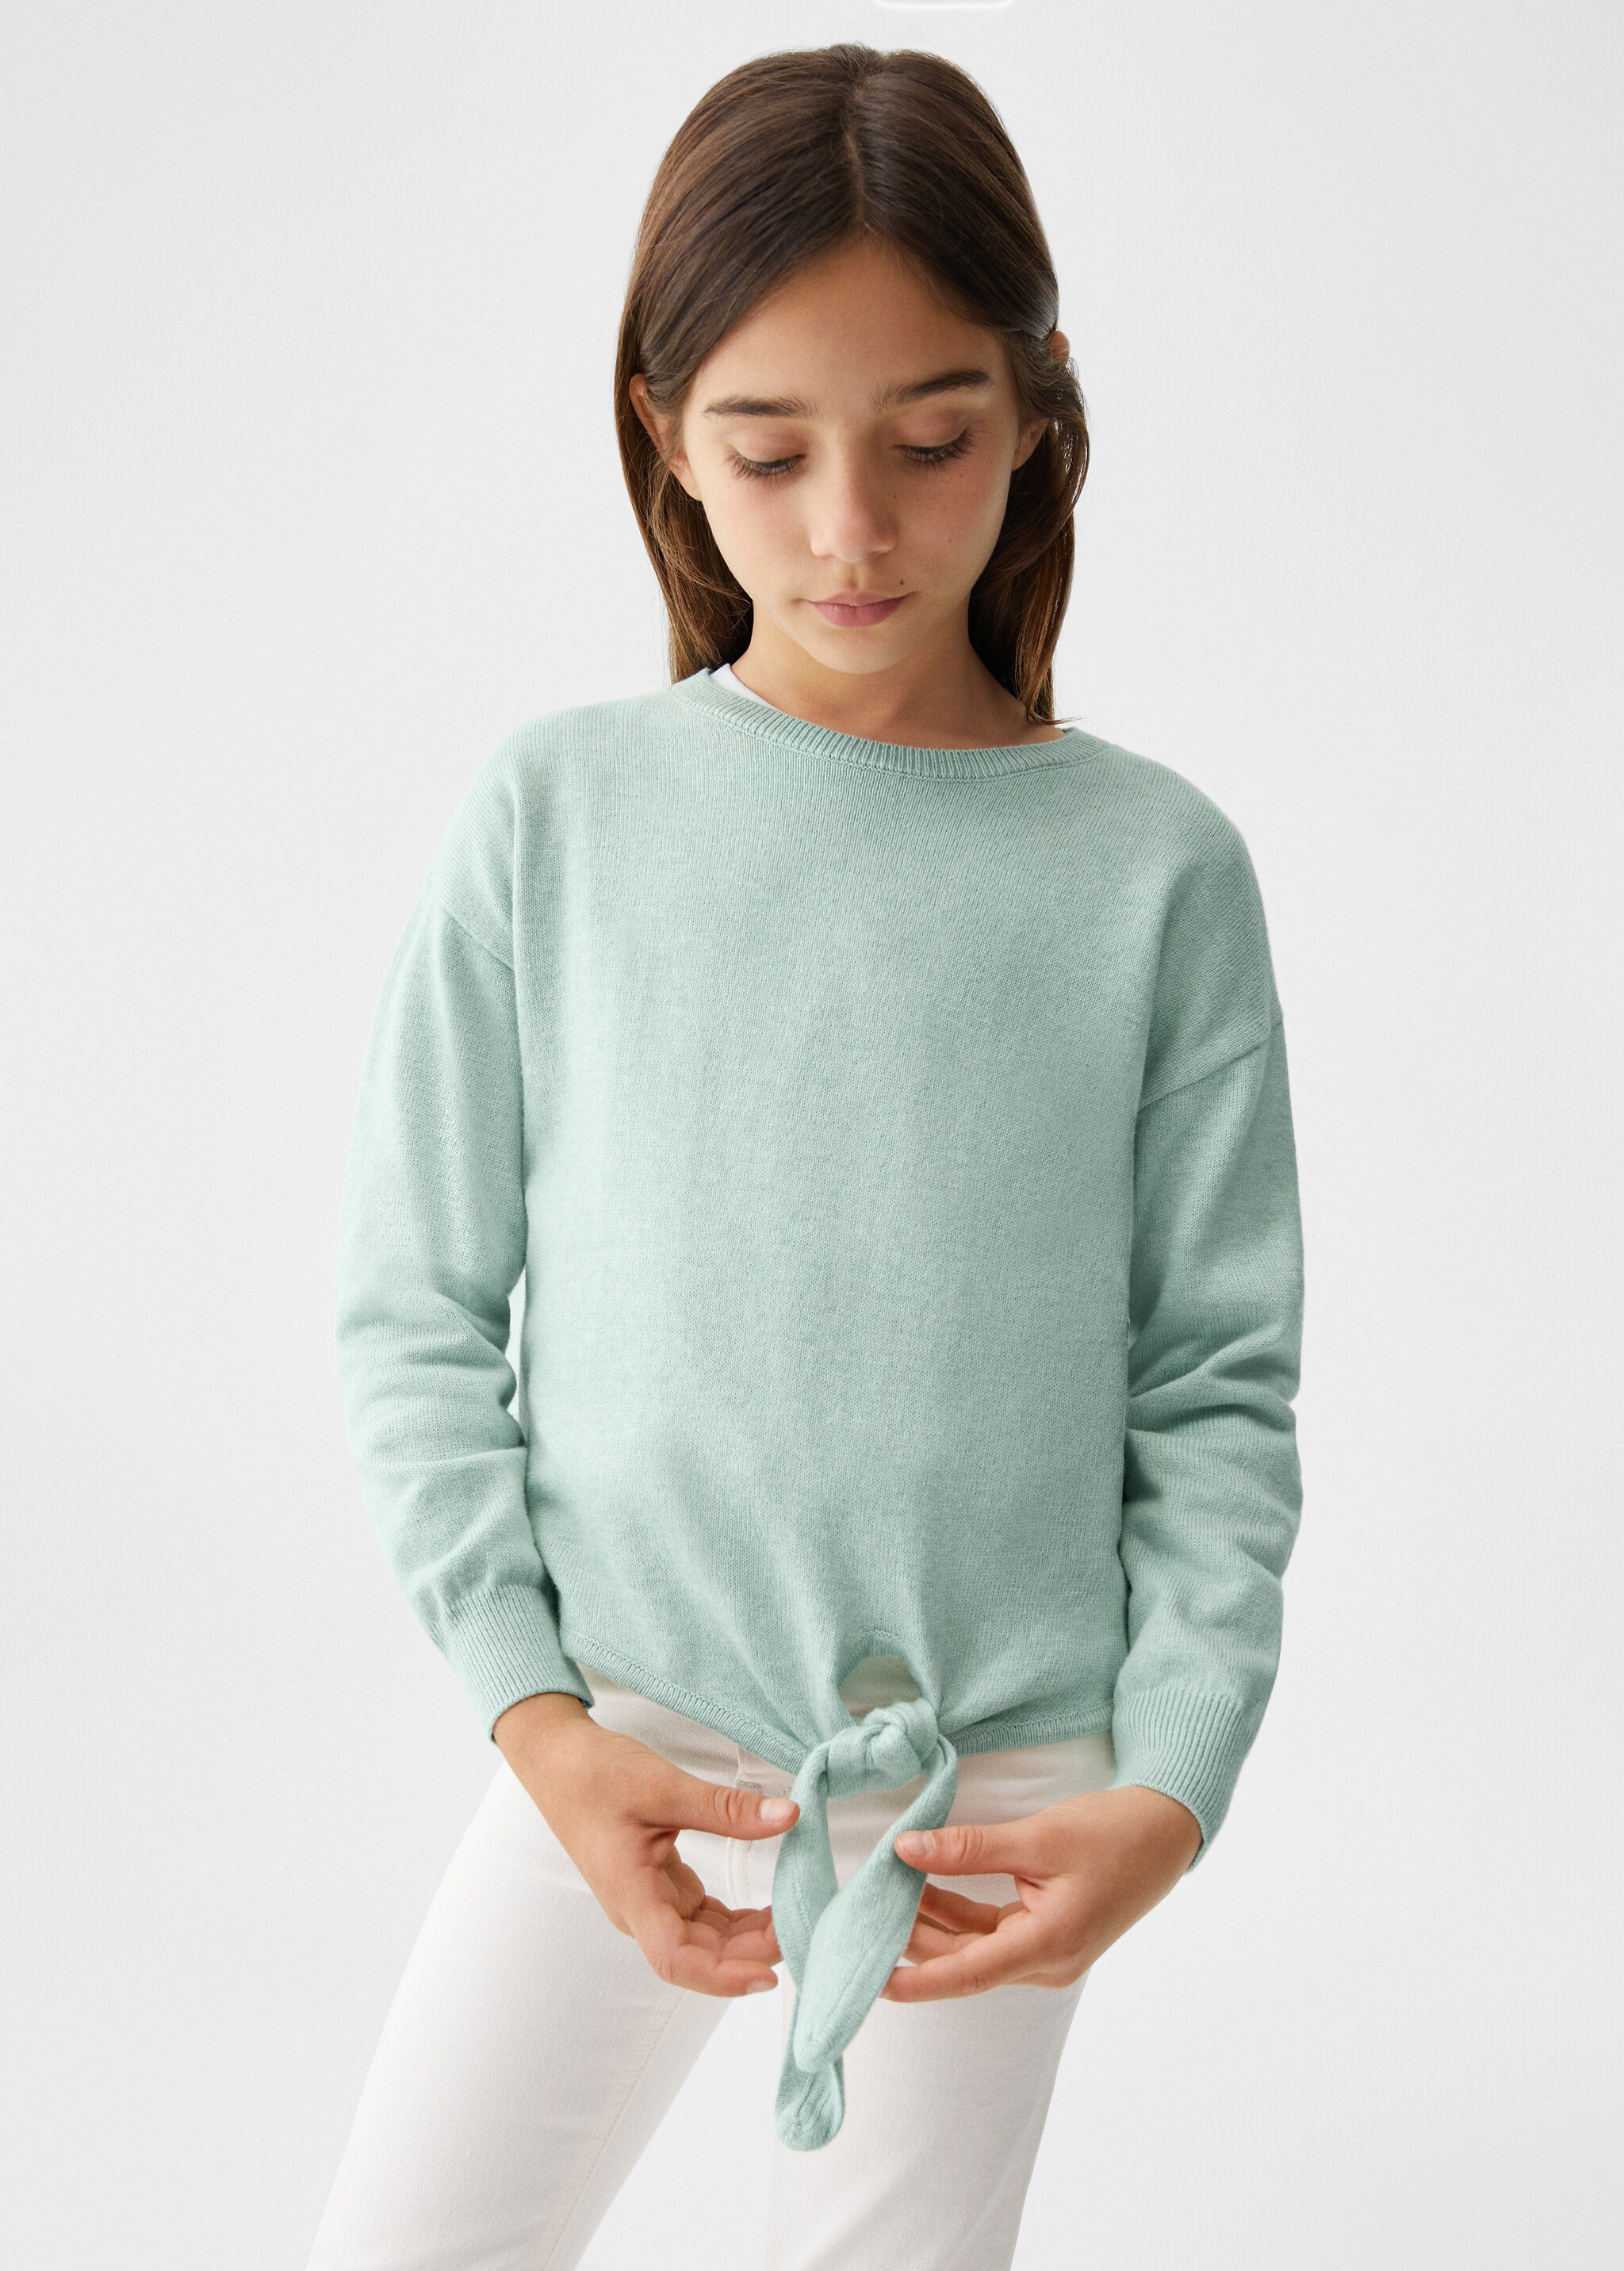 Bow knit sweater - Medium plane